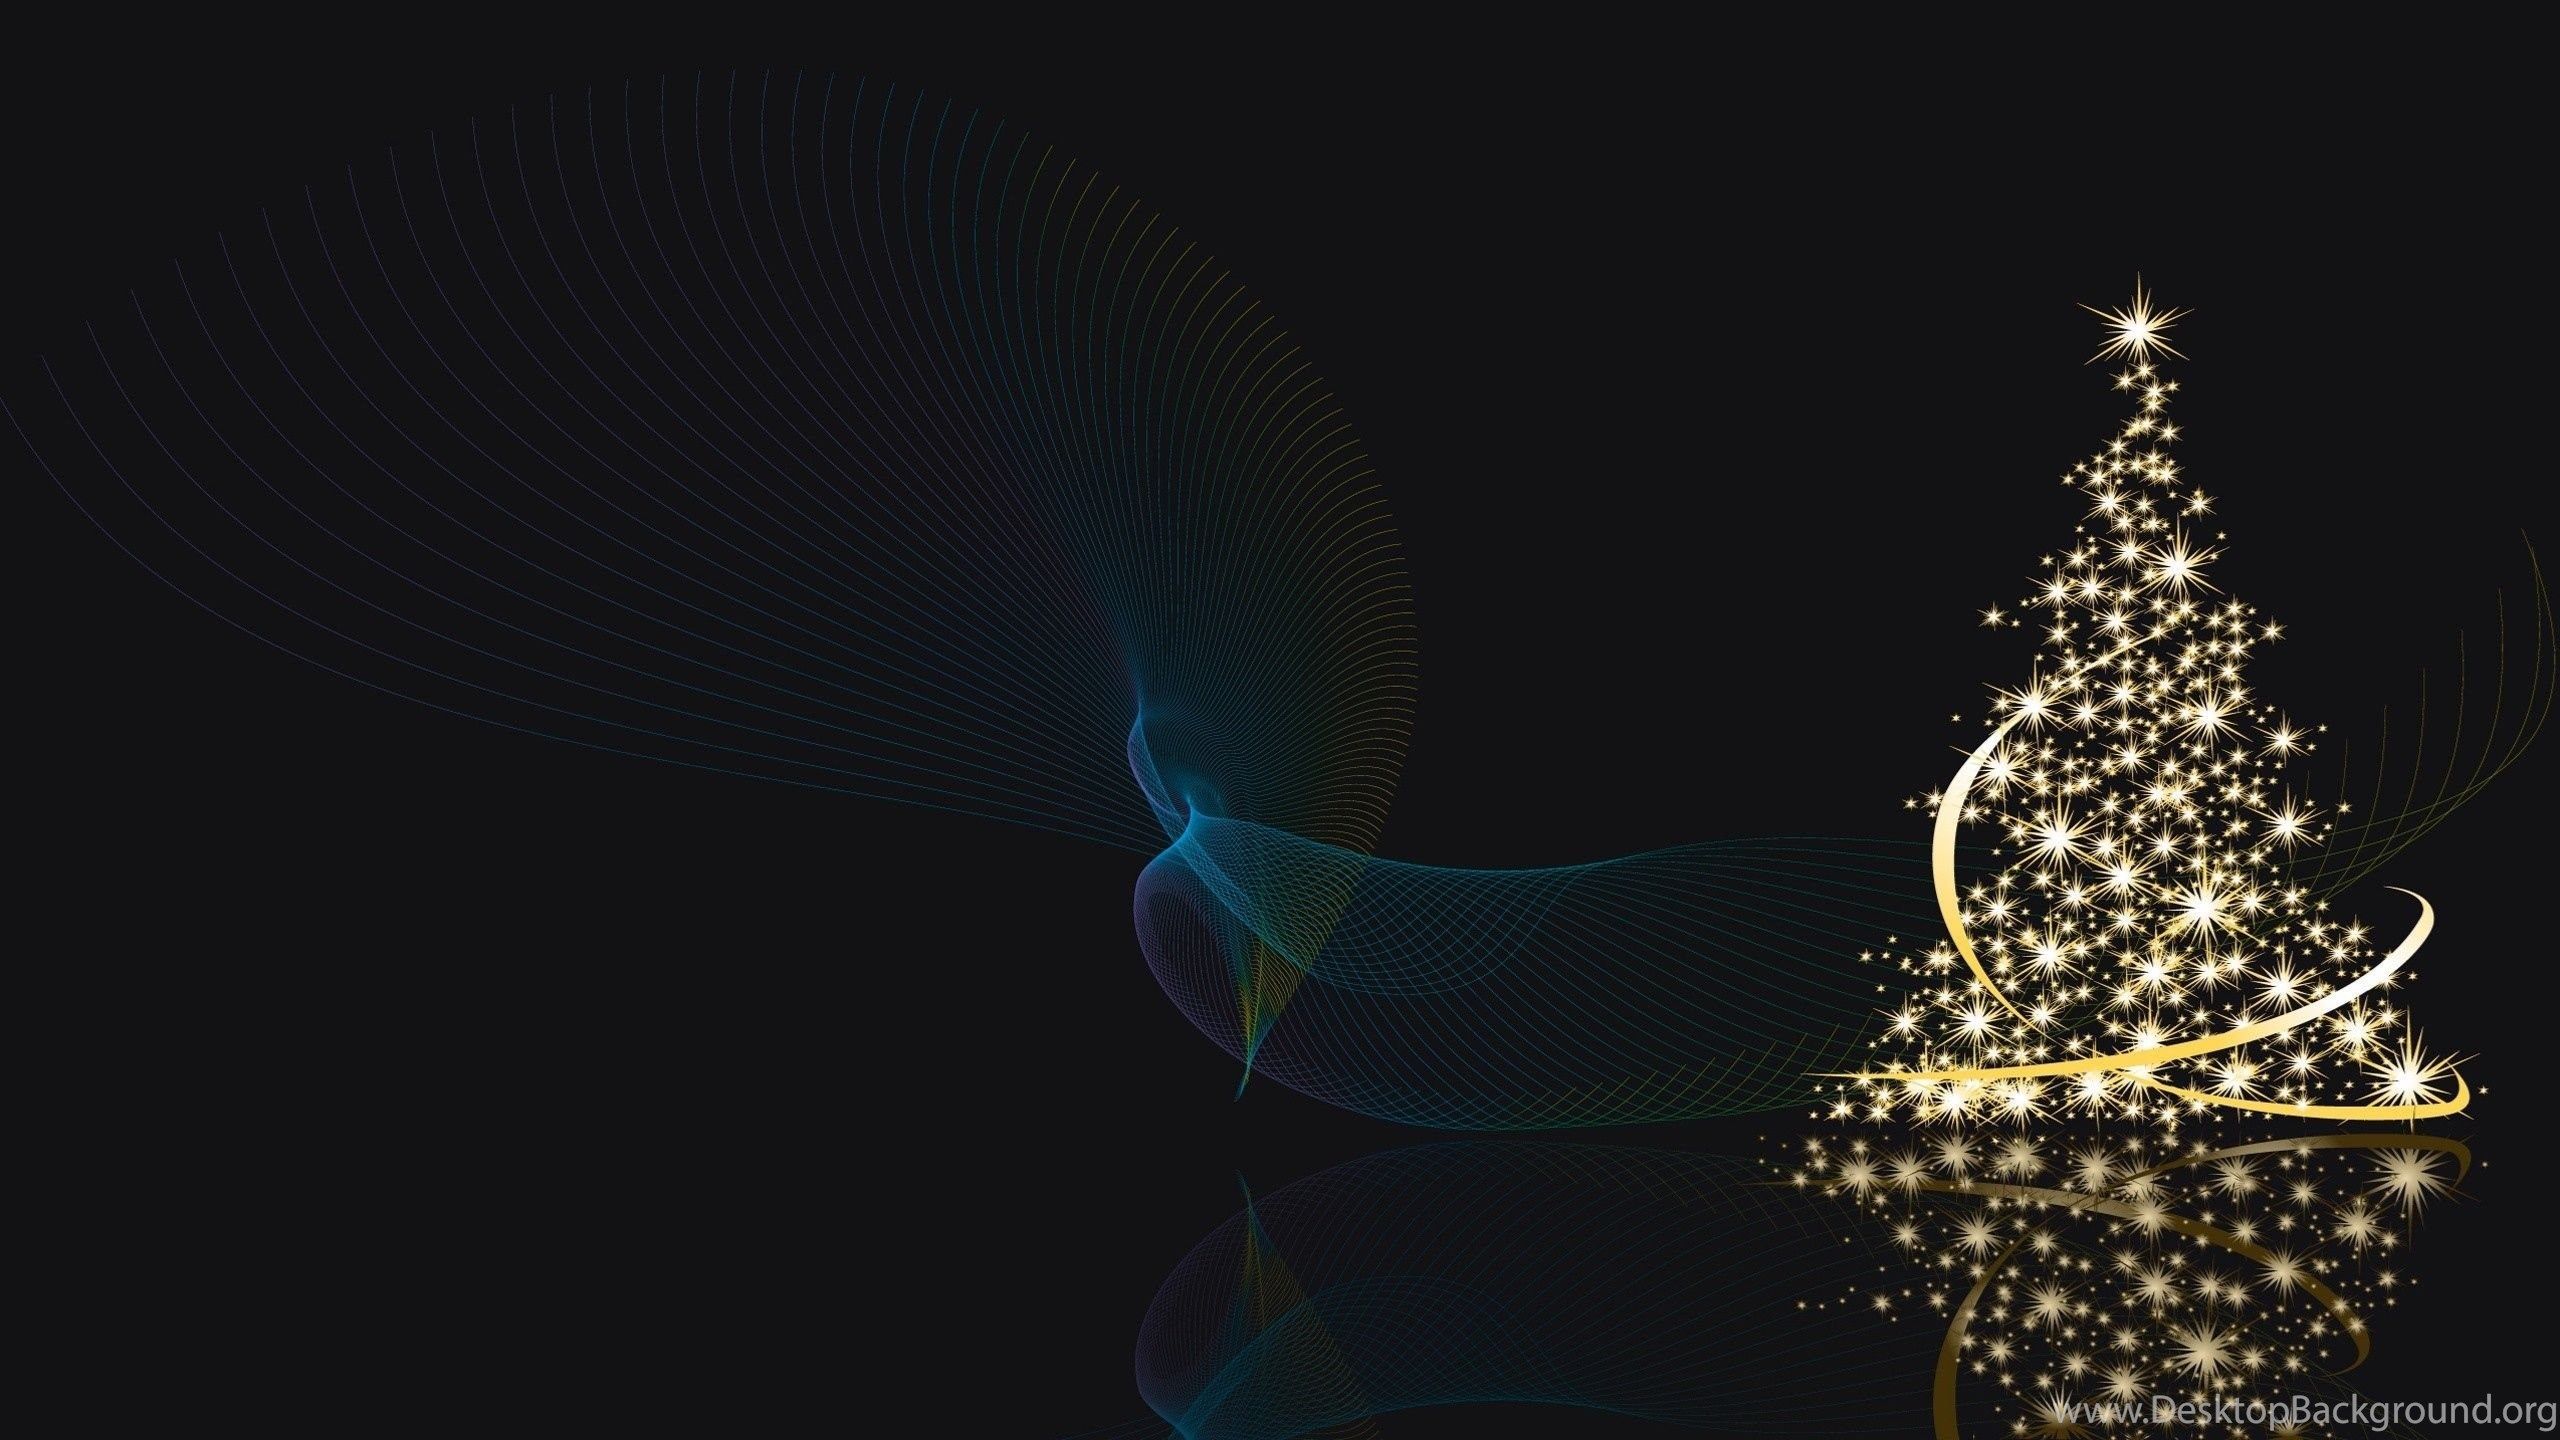 Download Wallpaper 2560x1440 Christmas Tree, Lights, Shine Mac. Desktop Background